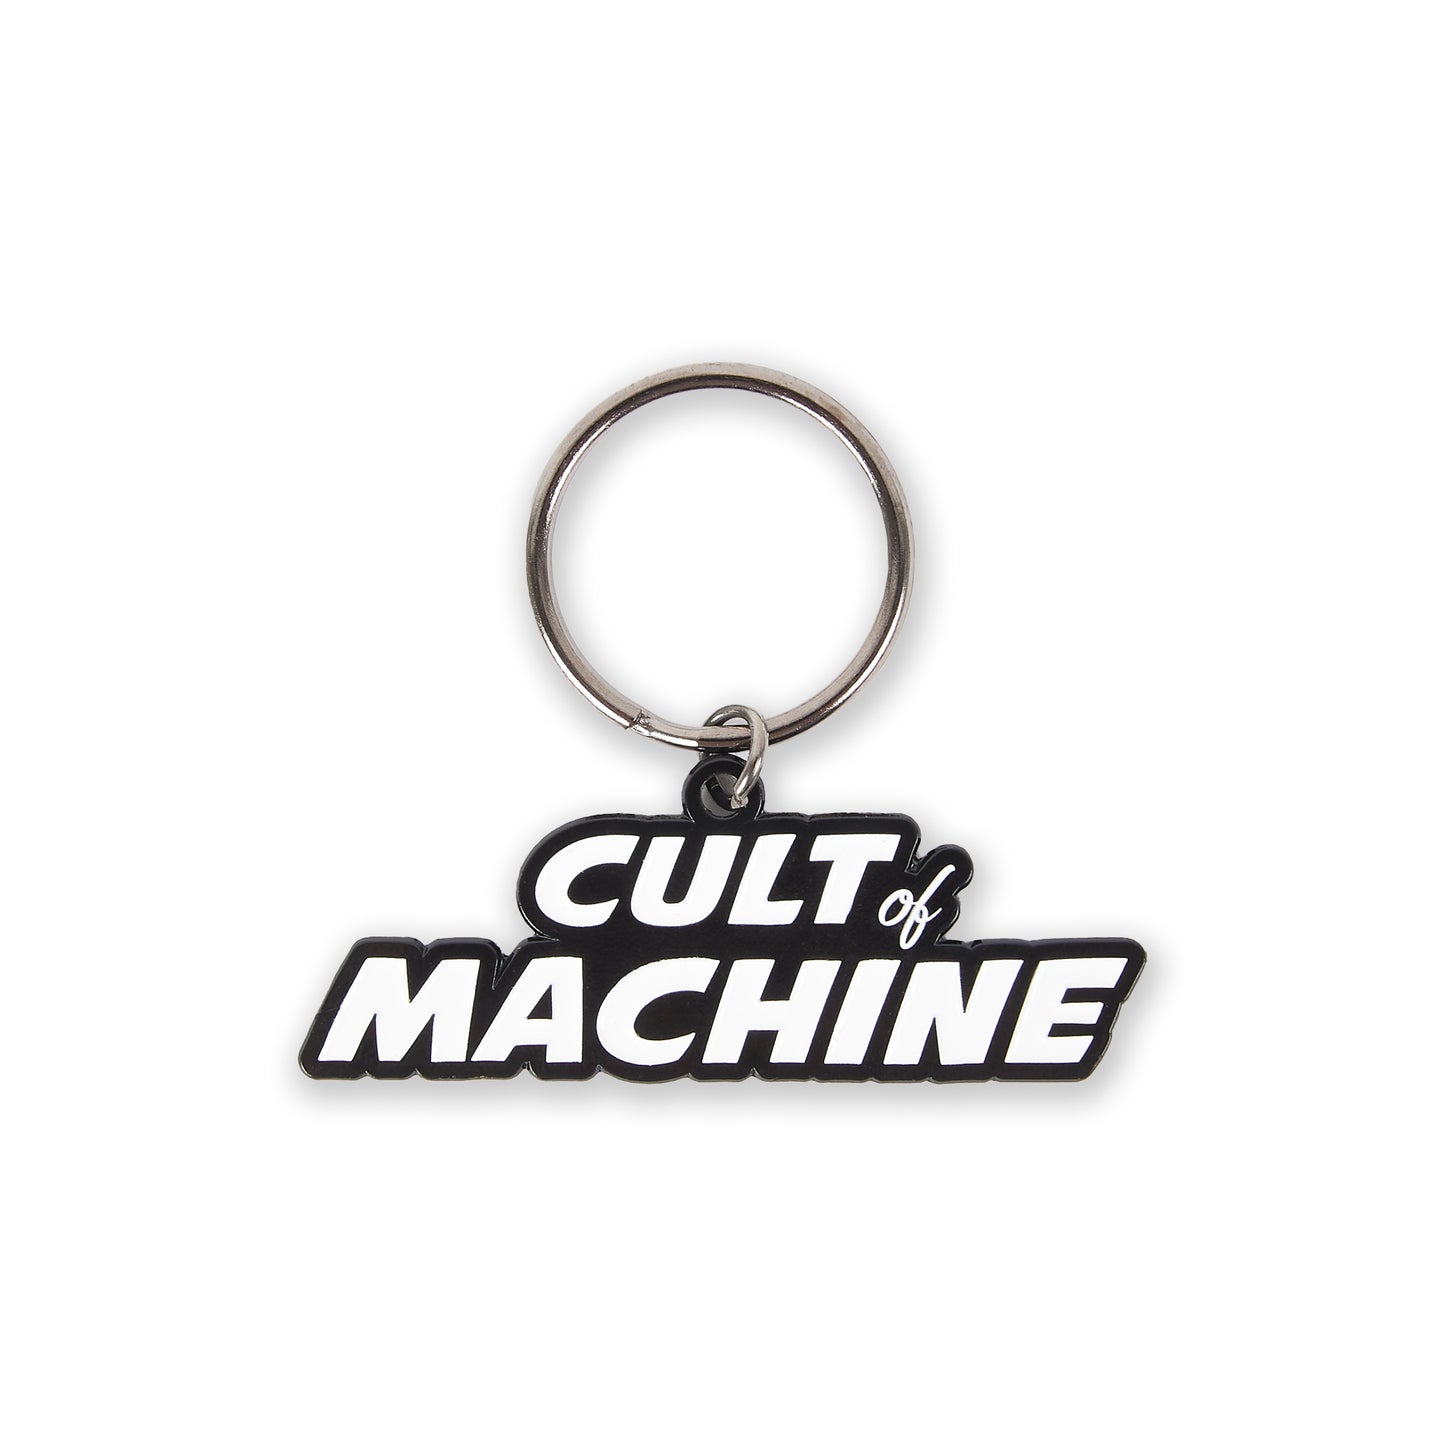 Cult Of Machine. Keyring. Black & White